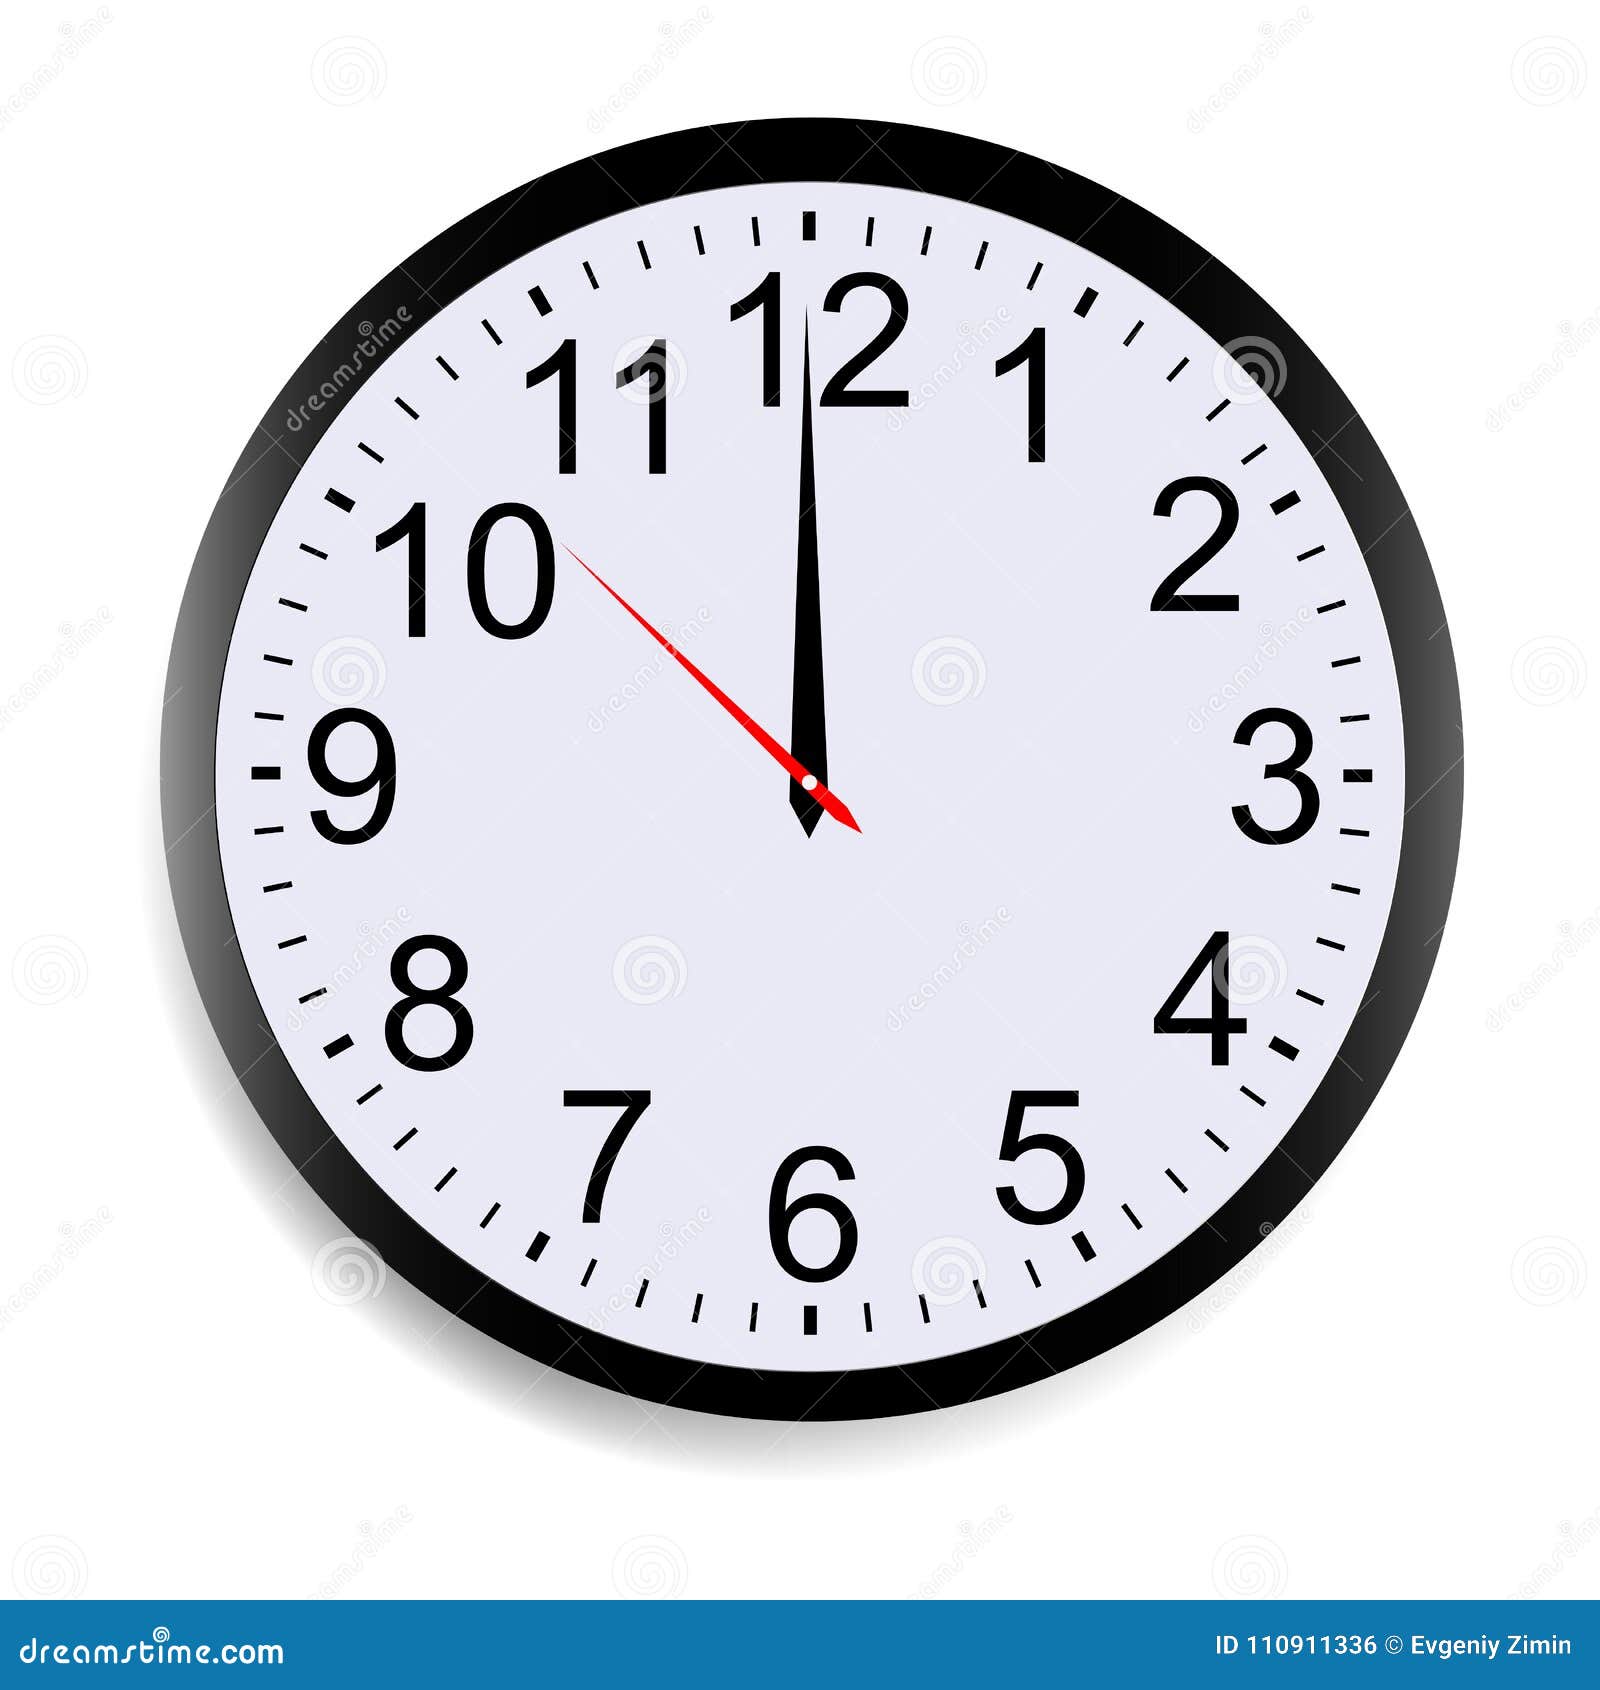 round clock face showing twelve o`clock